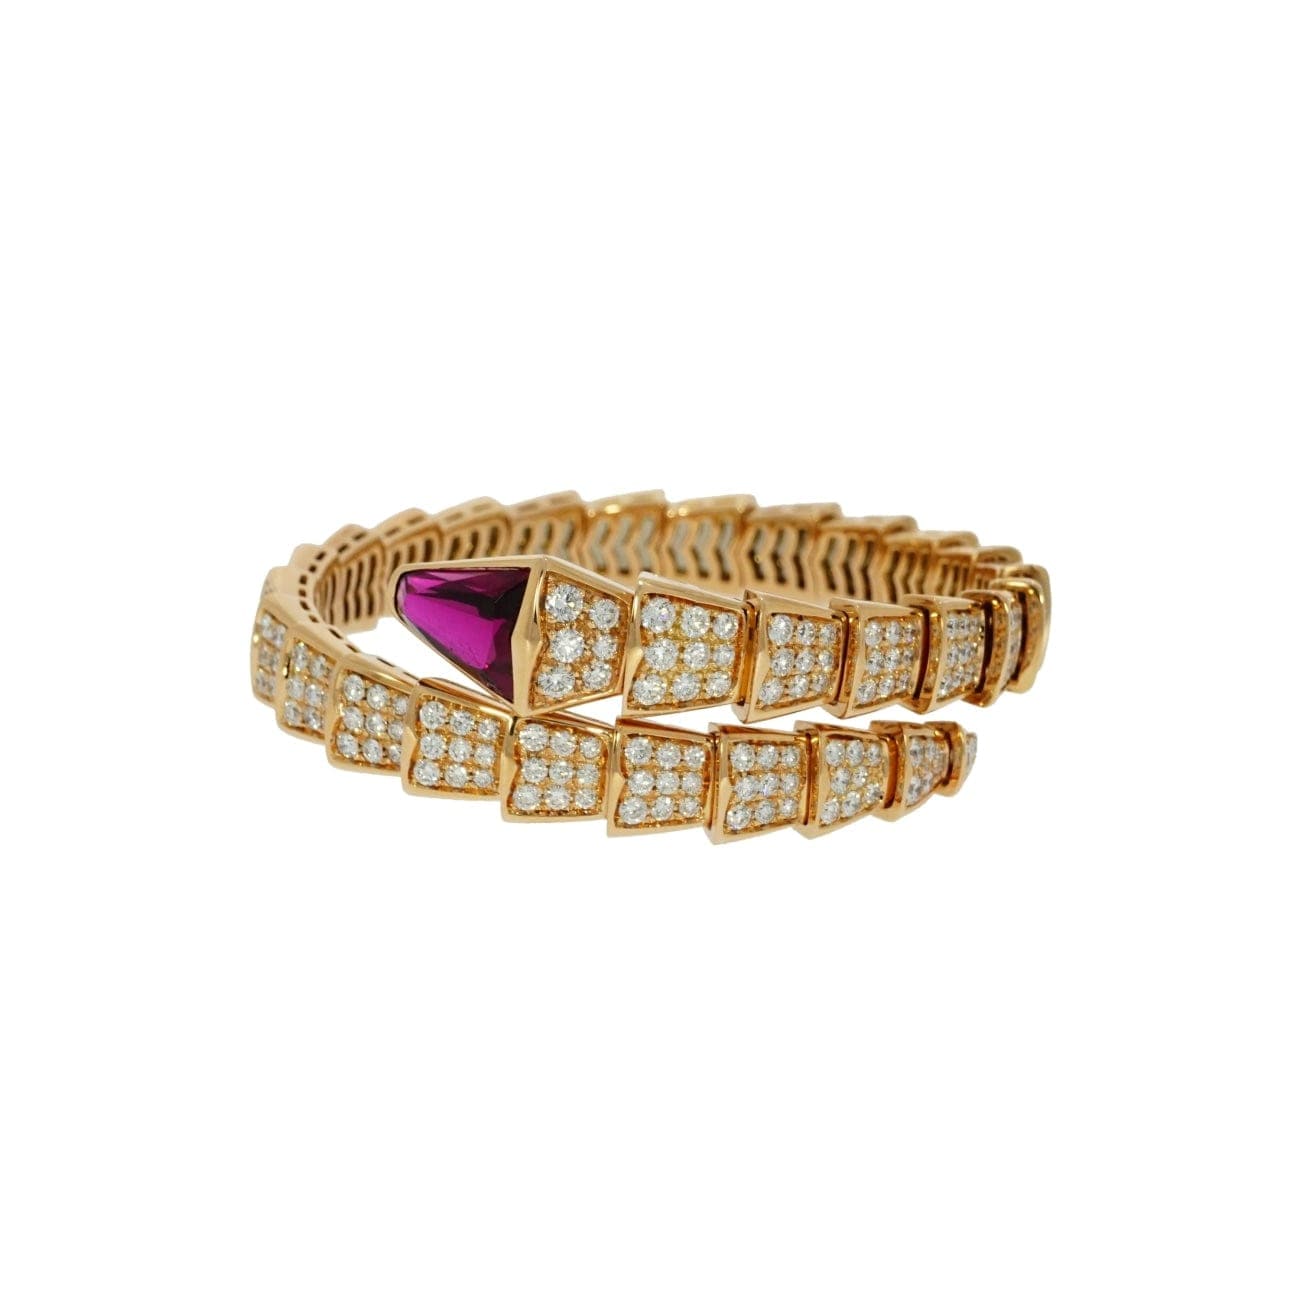 Bvlgari Jewelry 18k White Gold Serpenti Viper 5.02cttw 2 Row Full Pave  Diamond Bracelet - Size Medium 345203 | Mayors